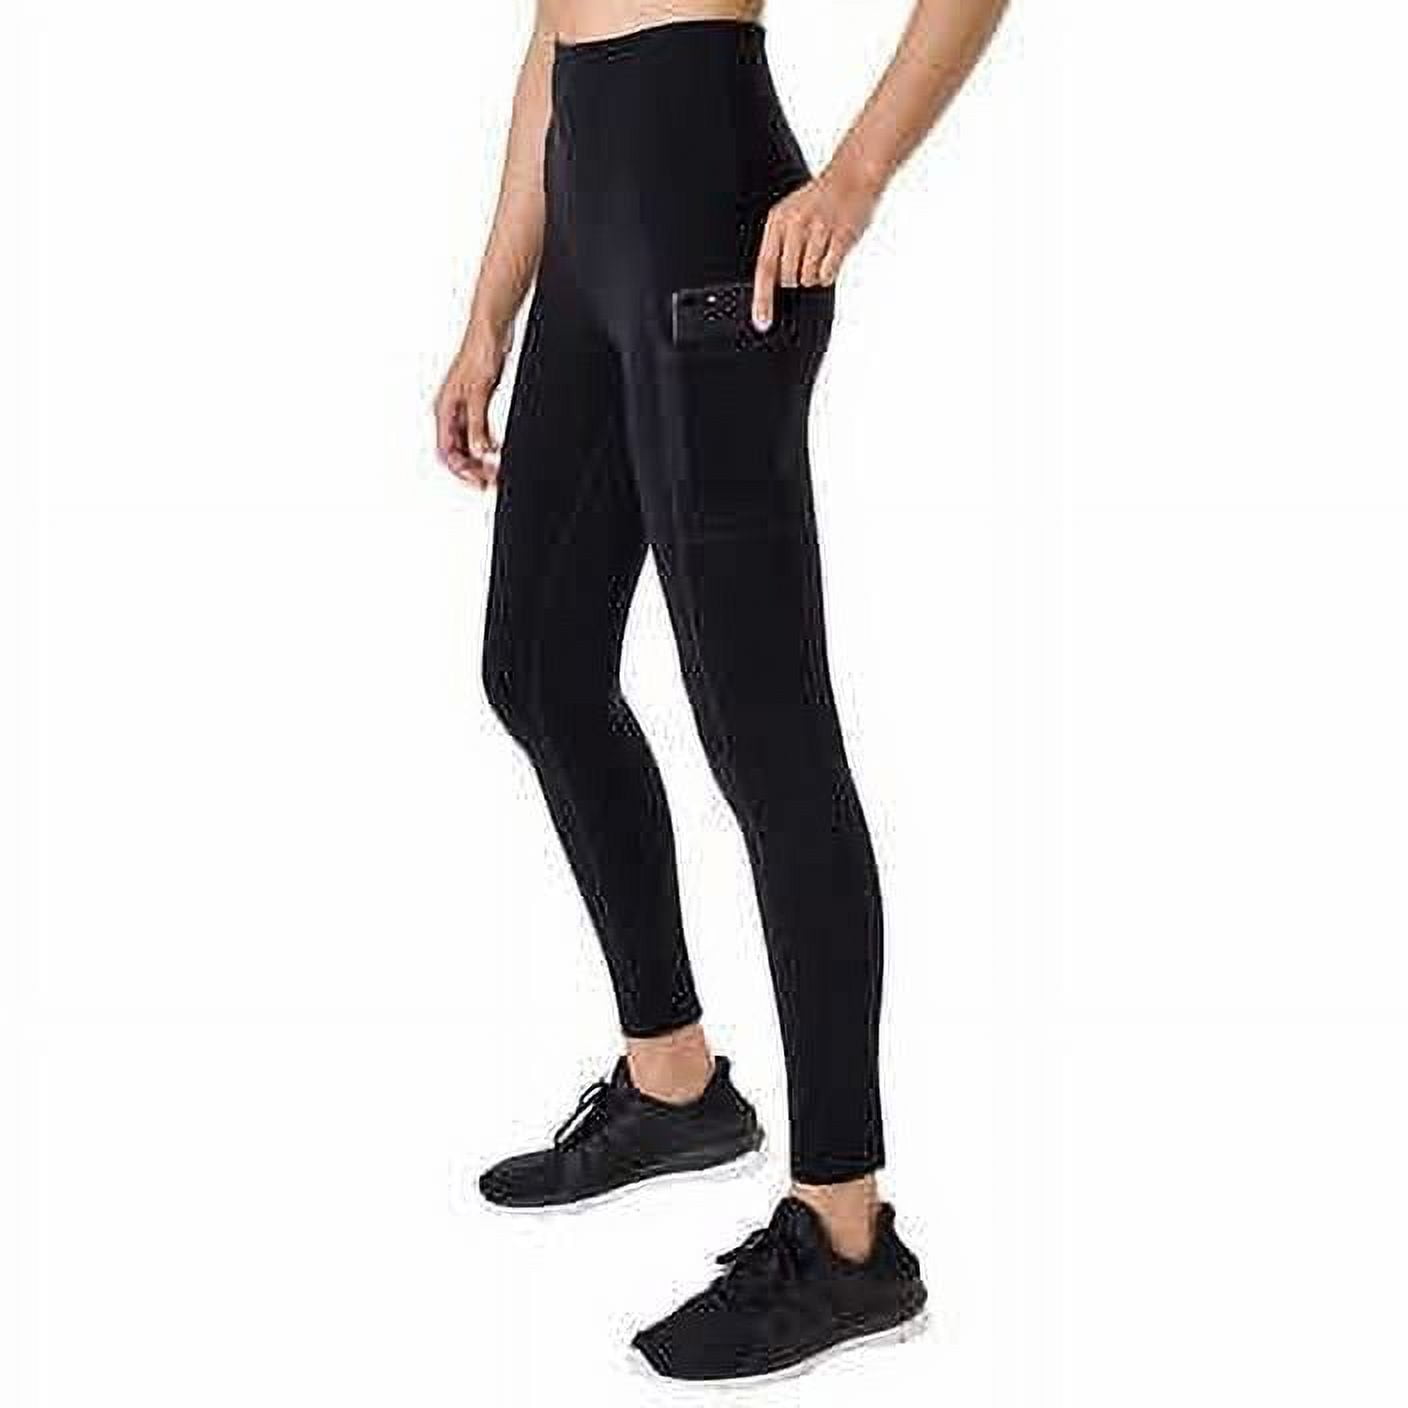 Tuff Athletics Women's Ultra Soft High Waist Yoga Pant Legging (Medium,  Black Side Pocket)